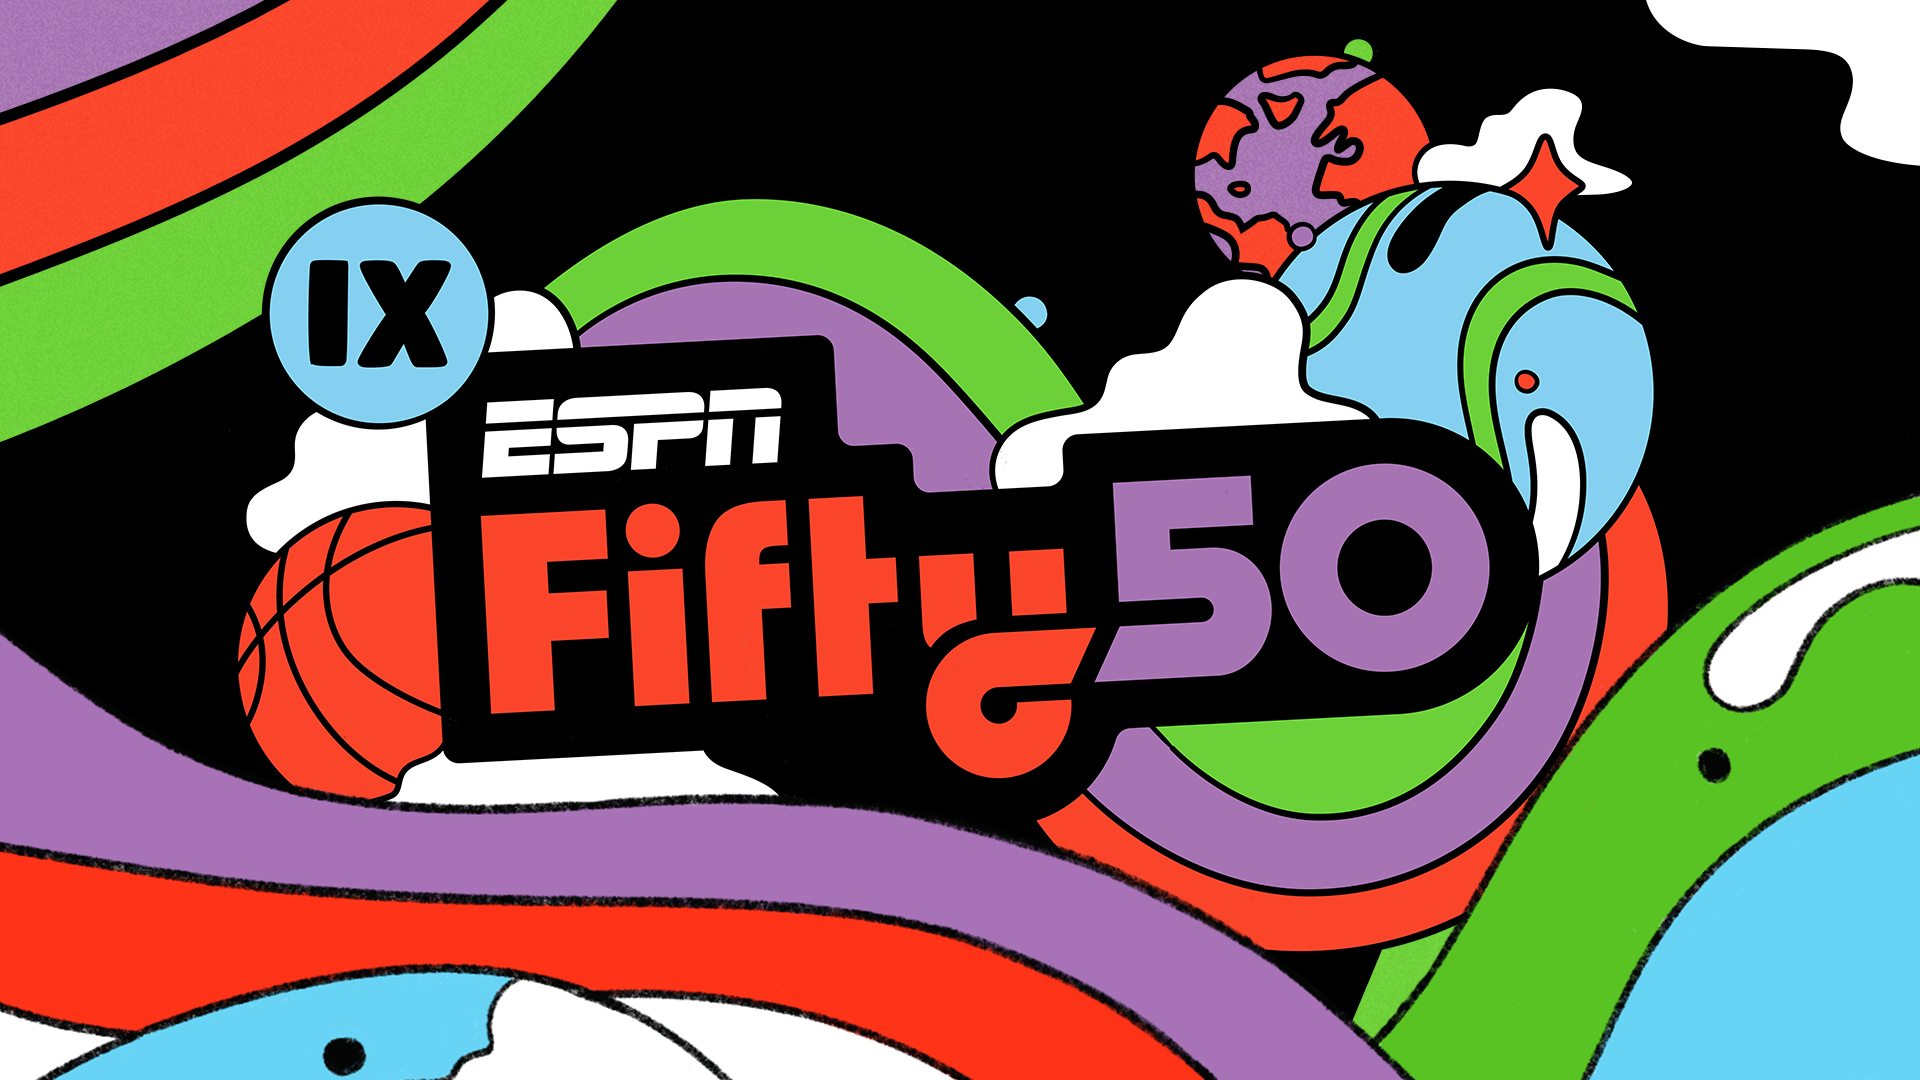 ↳ ESPN FIFTY/50